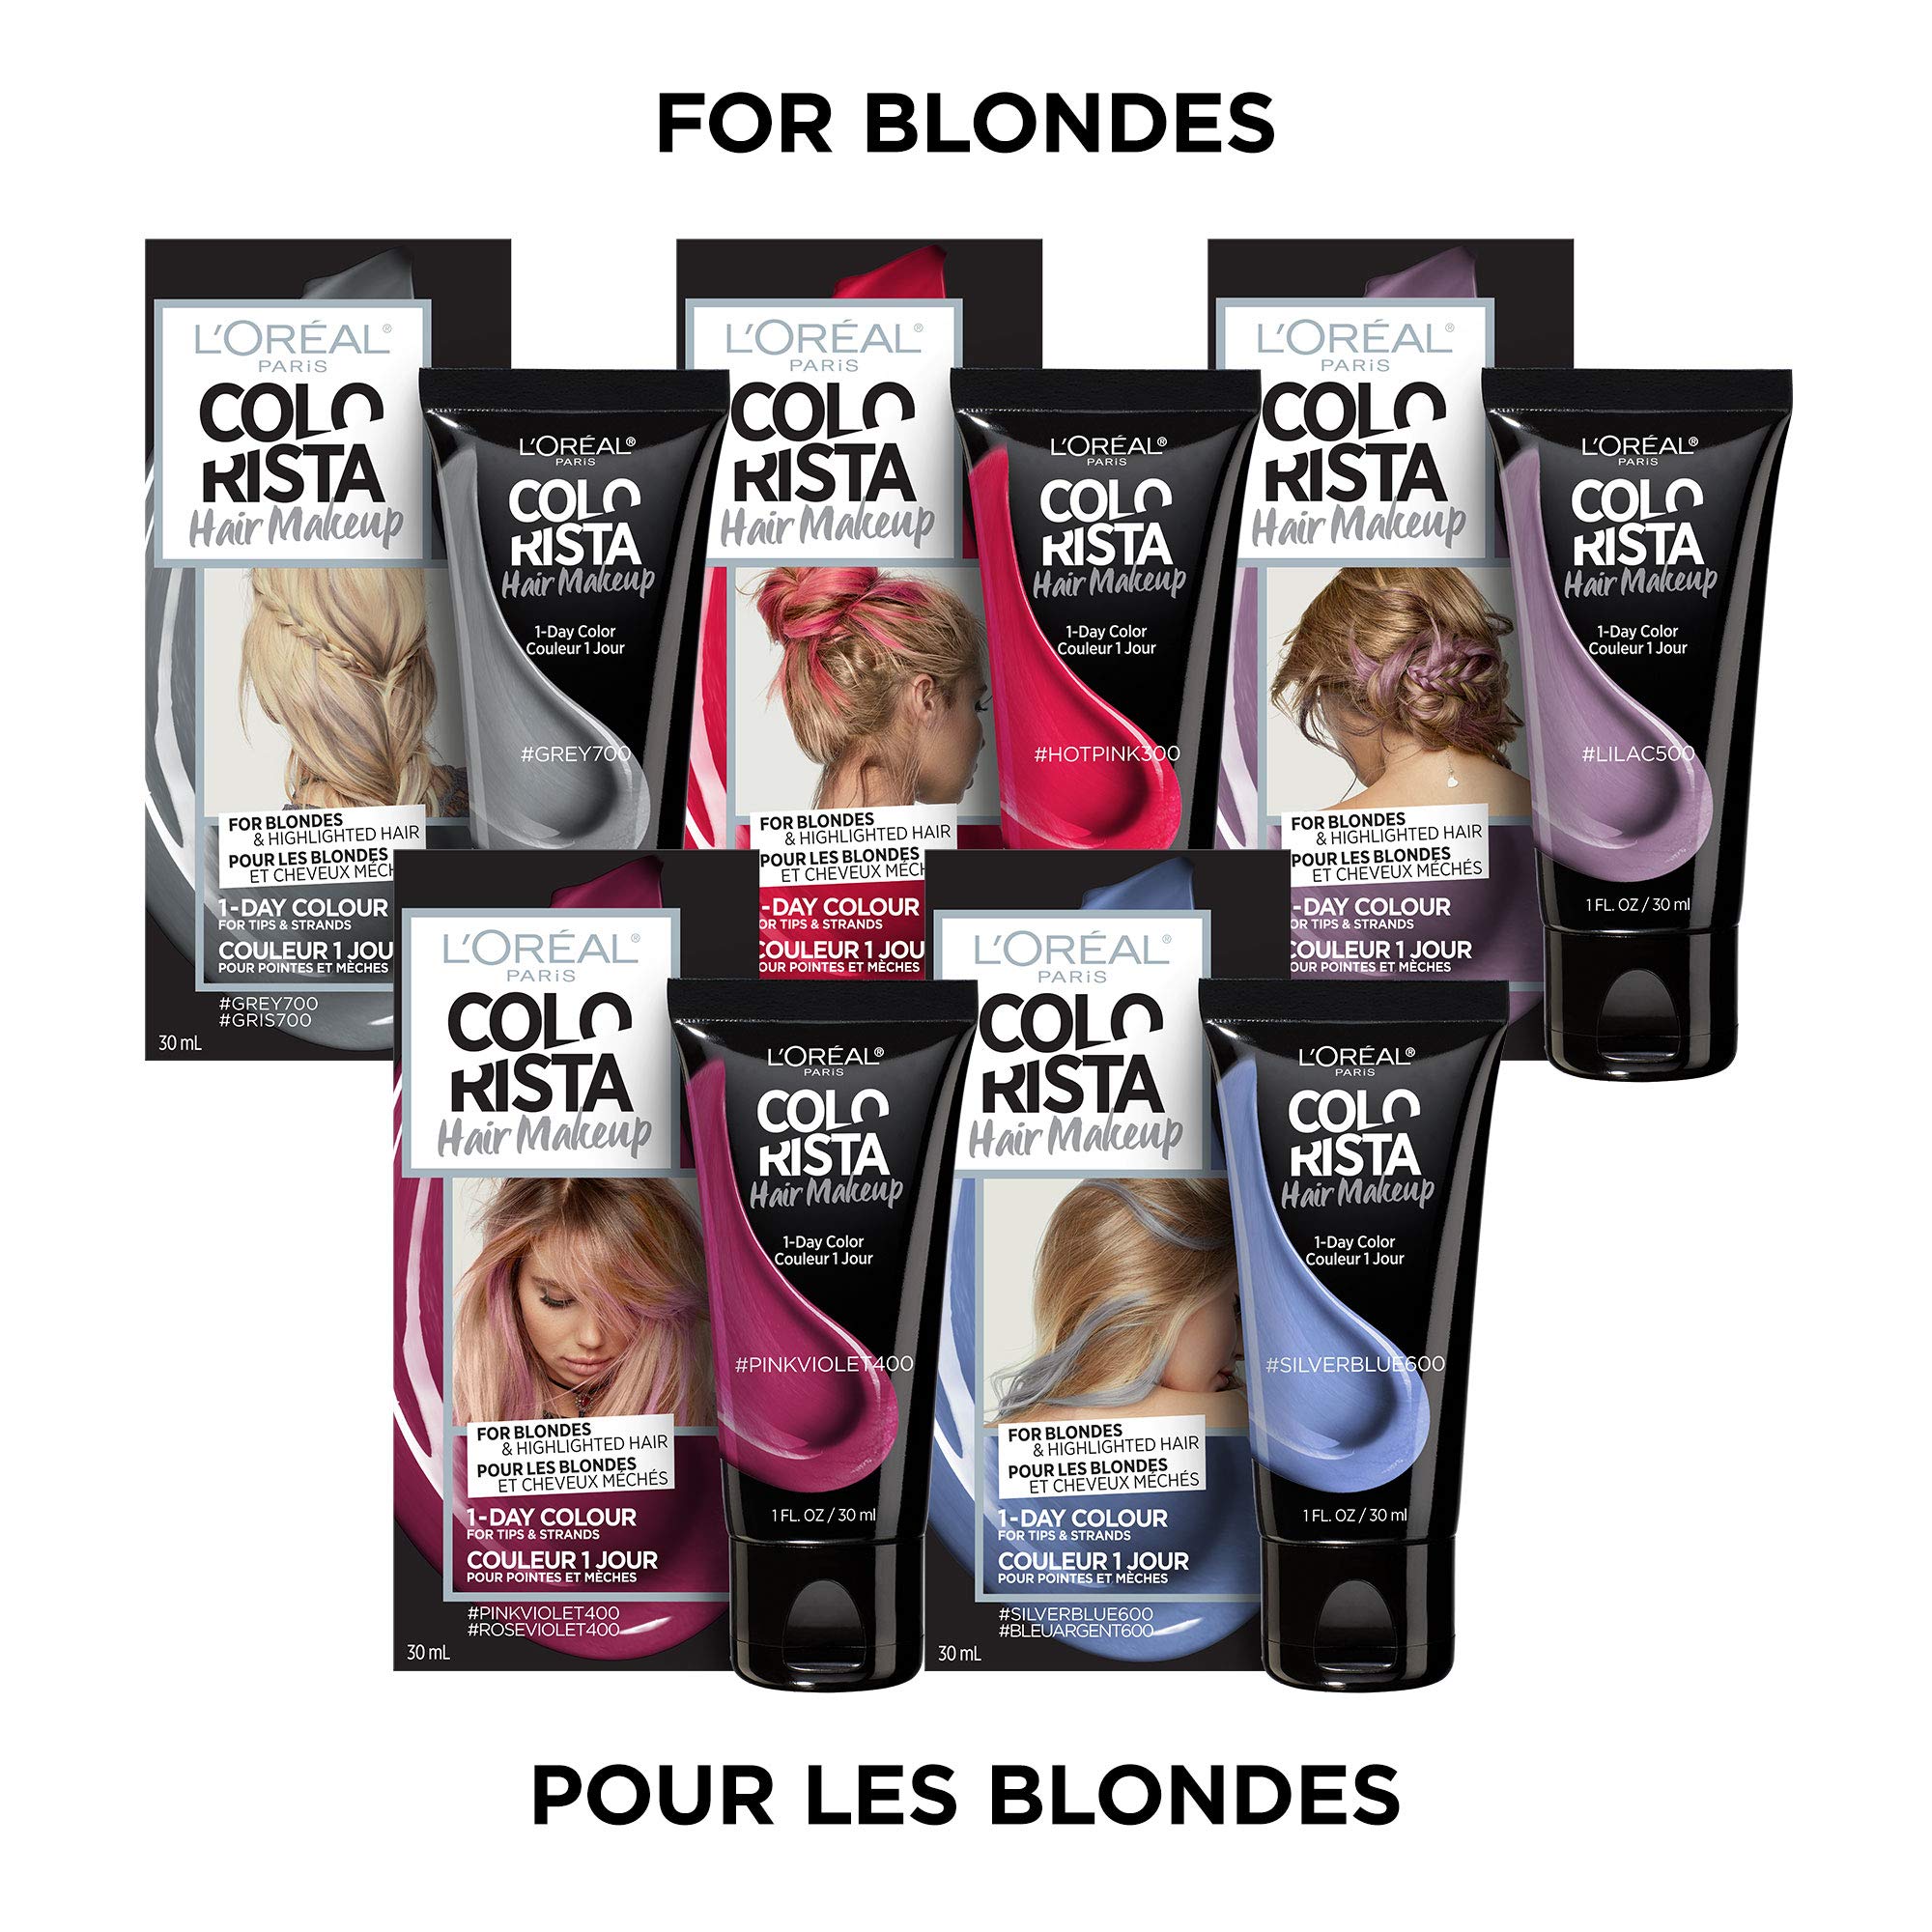 L'oreal Paris Hair Color Colorista Makeup 1-day for Blondes, Silverblue600, 1 Fluid Ounce